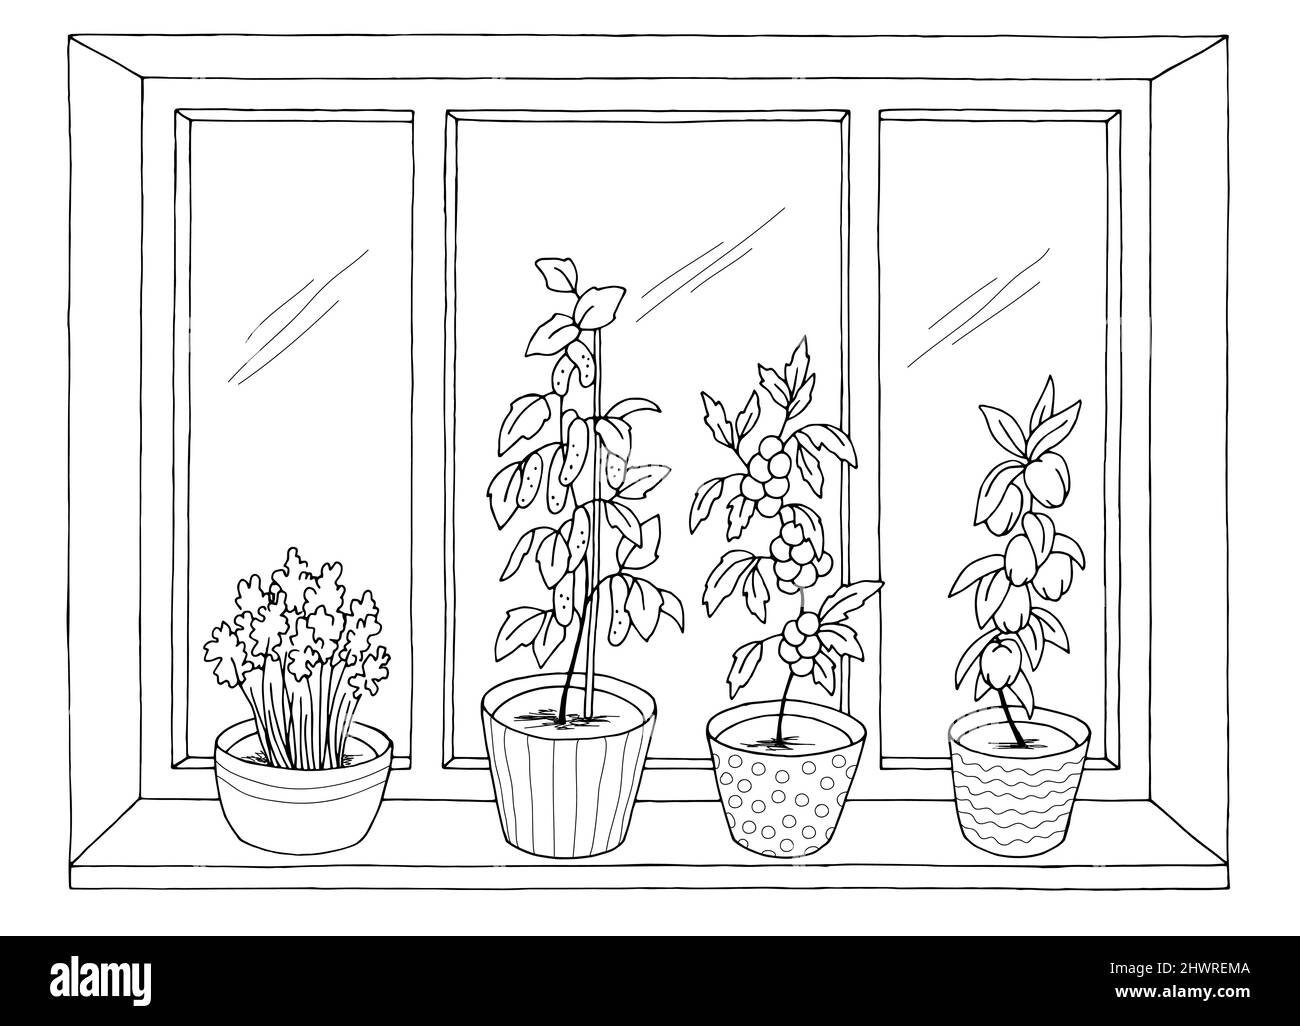 Fenster Gemüsegarten Grafik schwarz weiß Innenraum Skizze Illustration Vektor Stock Vektor